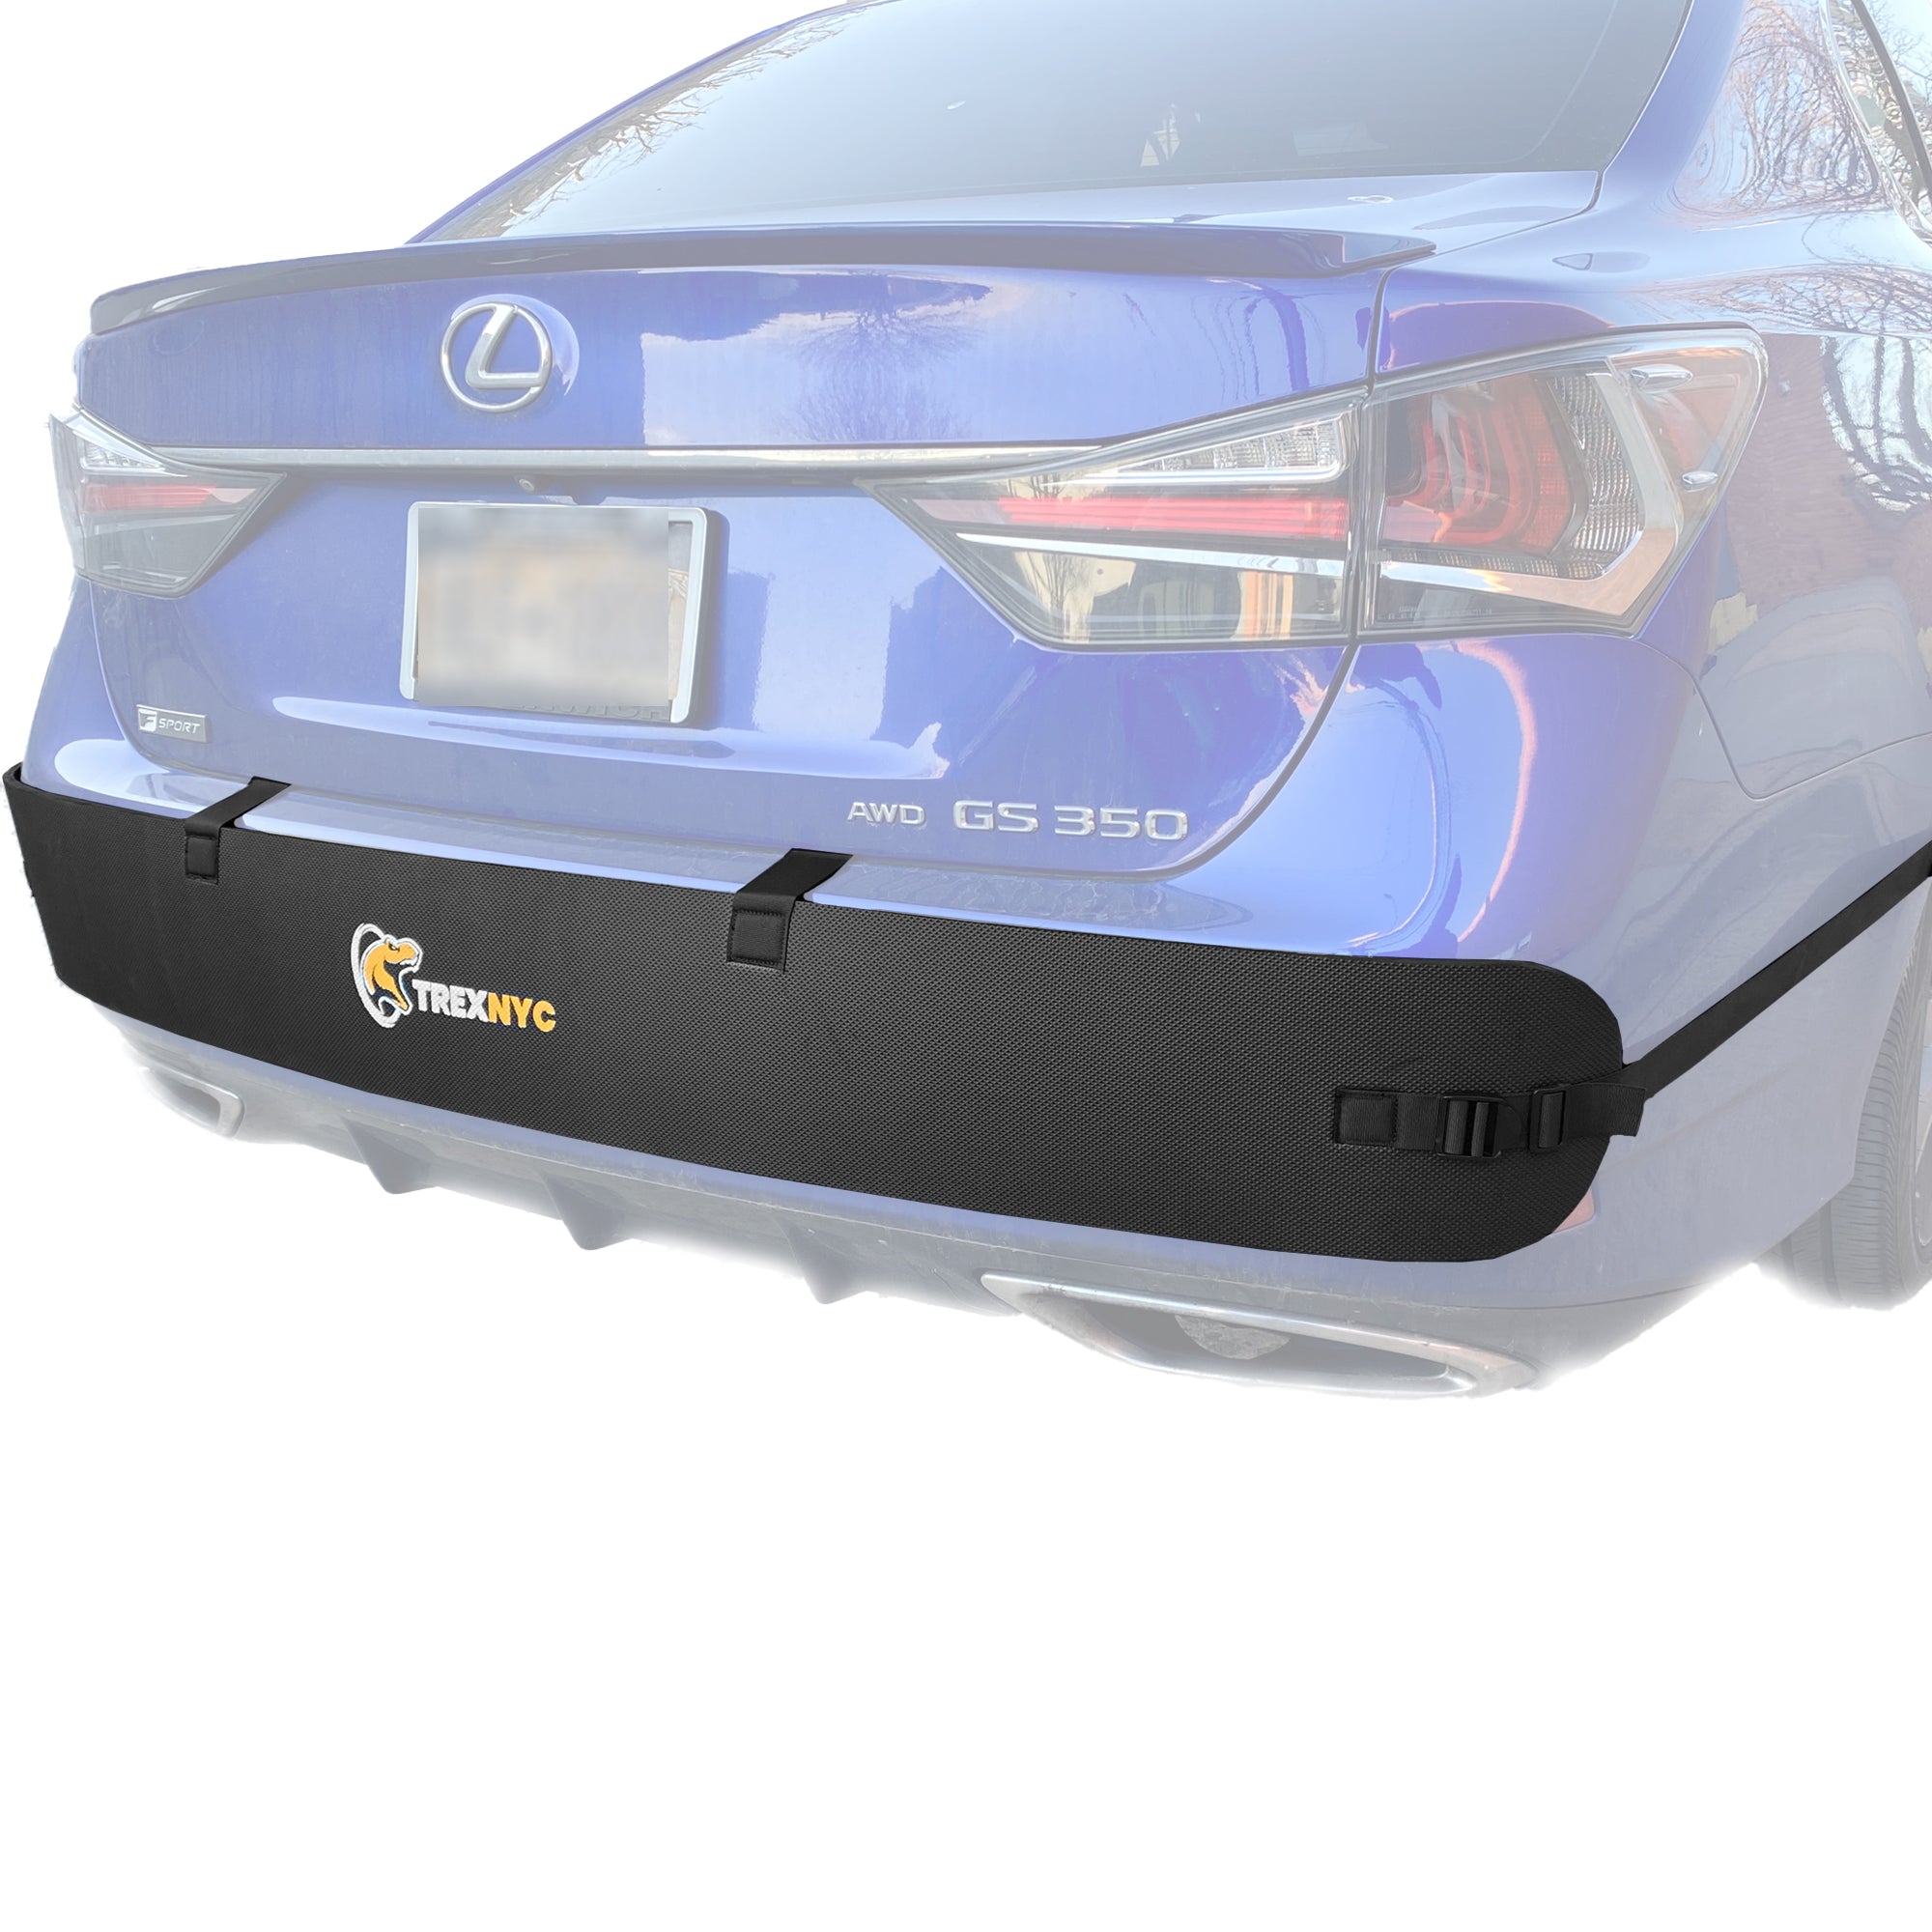  CLT Car Headlight Restoration Kit Headlight Restorer Wipes (2)  : Automotive